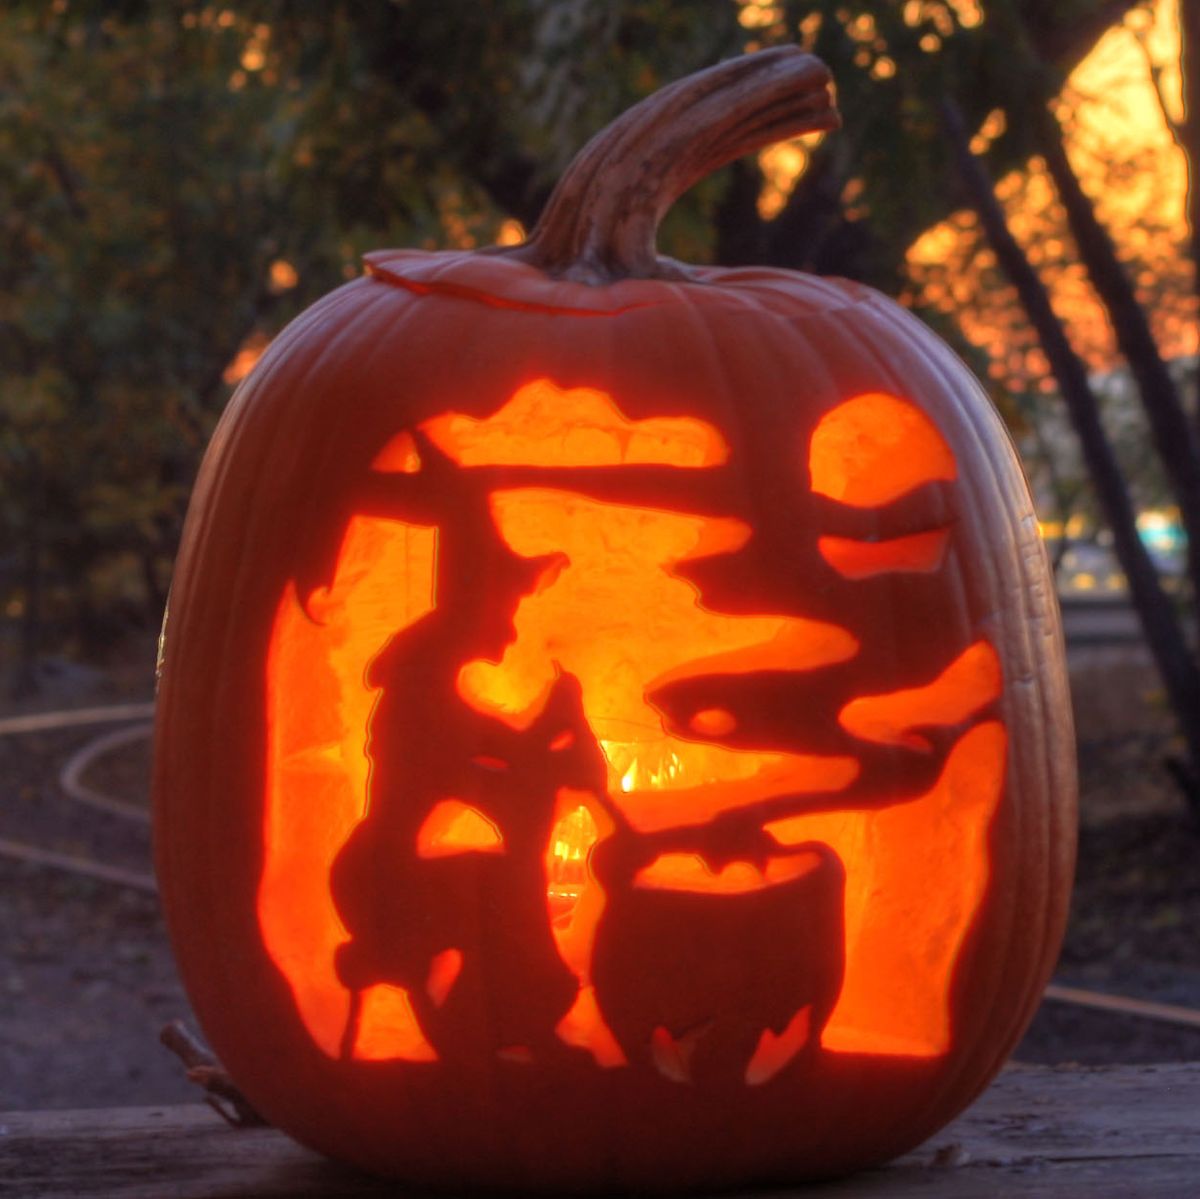 illuminated-halloween-at-dusk-royalty-free-image-1666792252.jpg